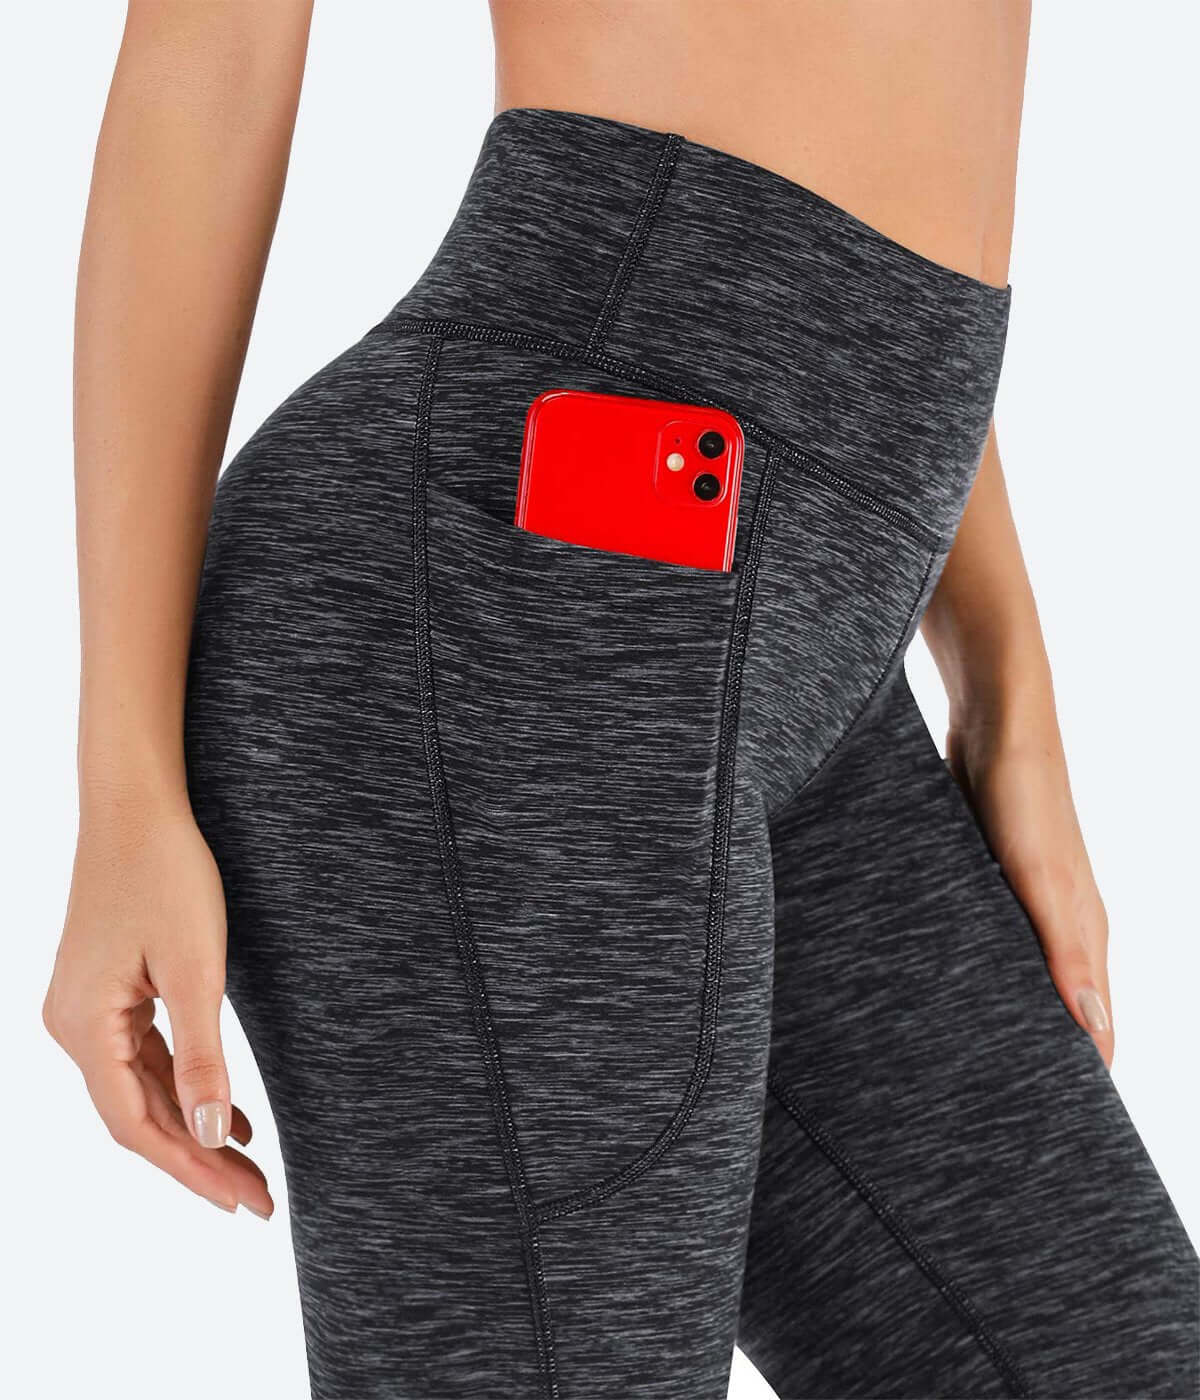 KINPLE Bootcut Yoga Pants with Pockets for Women High Waist